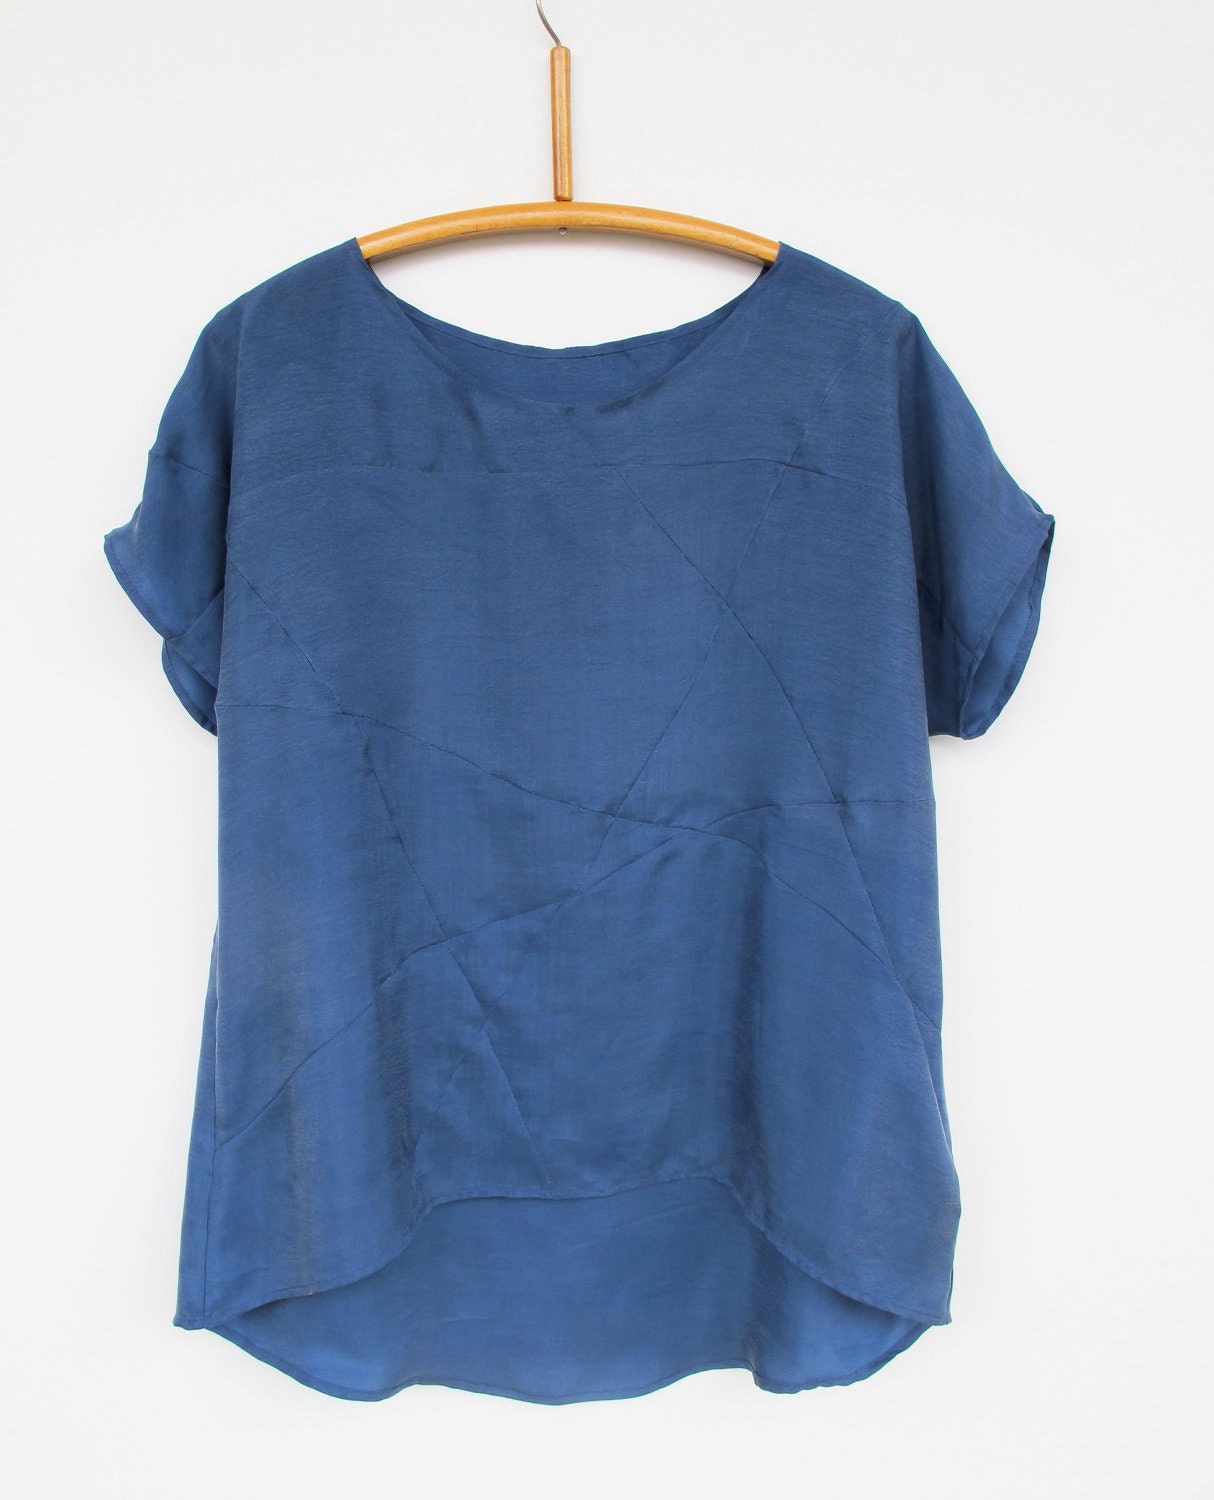 Geometric Shirt in Bluegrey Tunic - Etsy